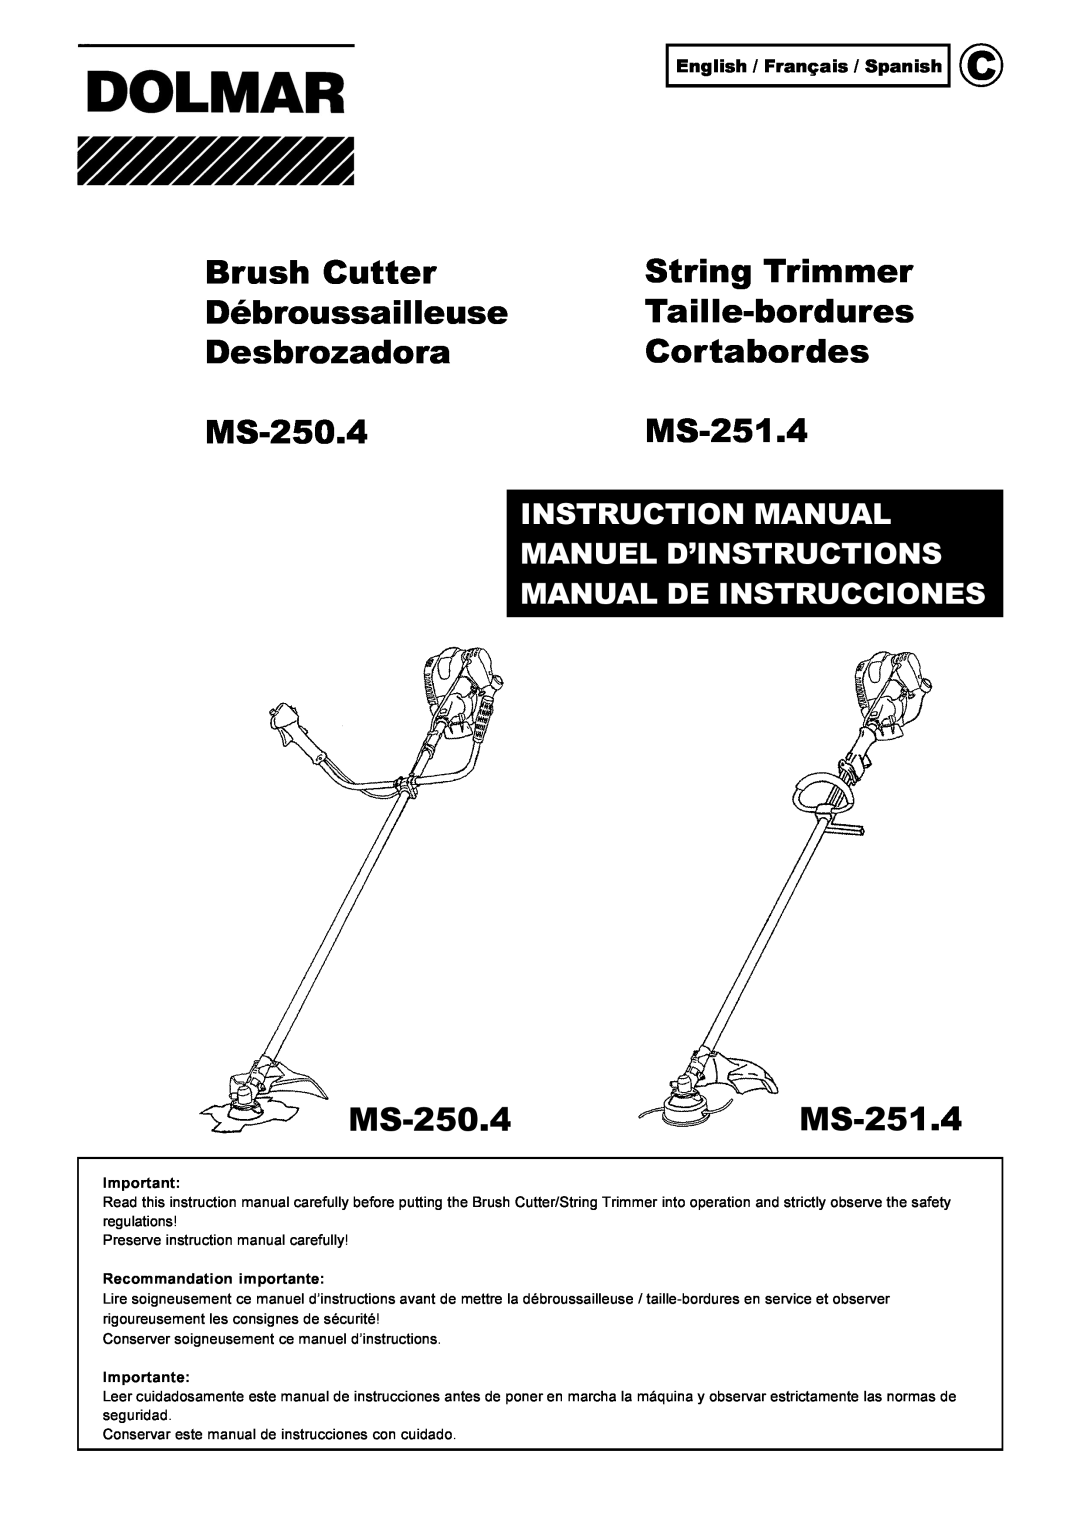 Dolmar MS-251.4 instruction manual Brush Cutter, String Trimmer, Débroussailleuse, Taille-bordures, Desbrozadora, MS-250.4 